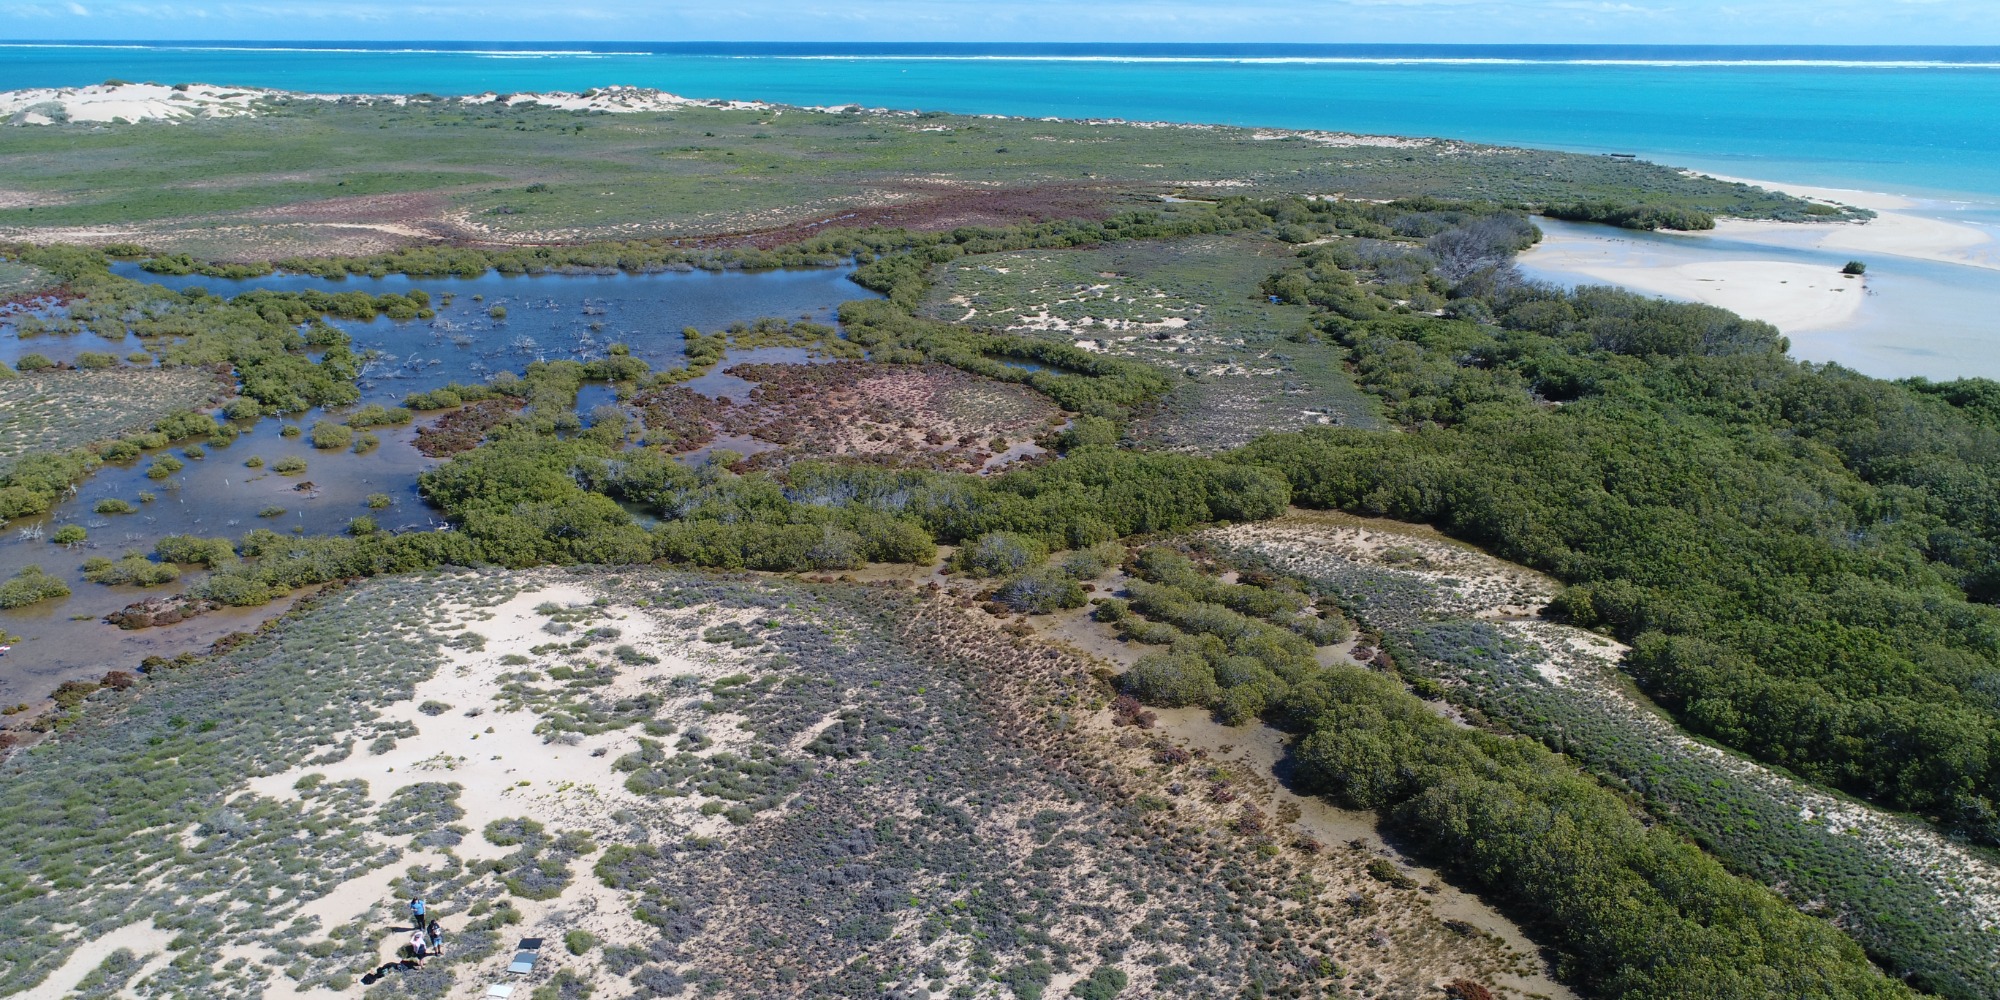 Coastal mangrove